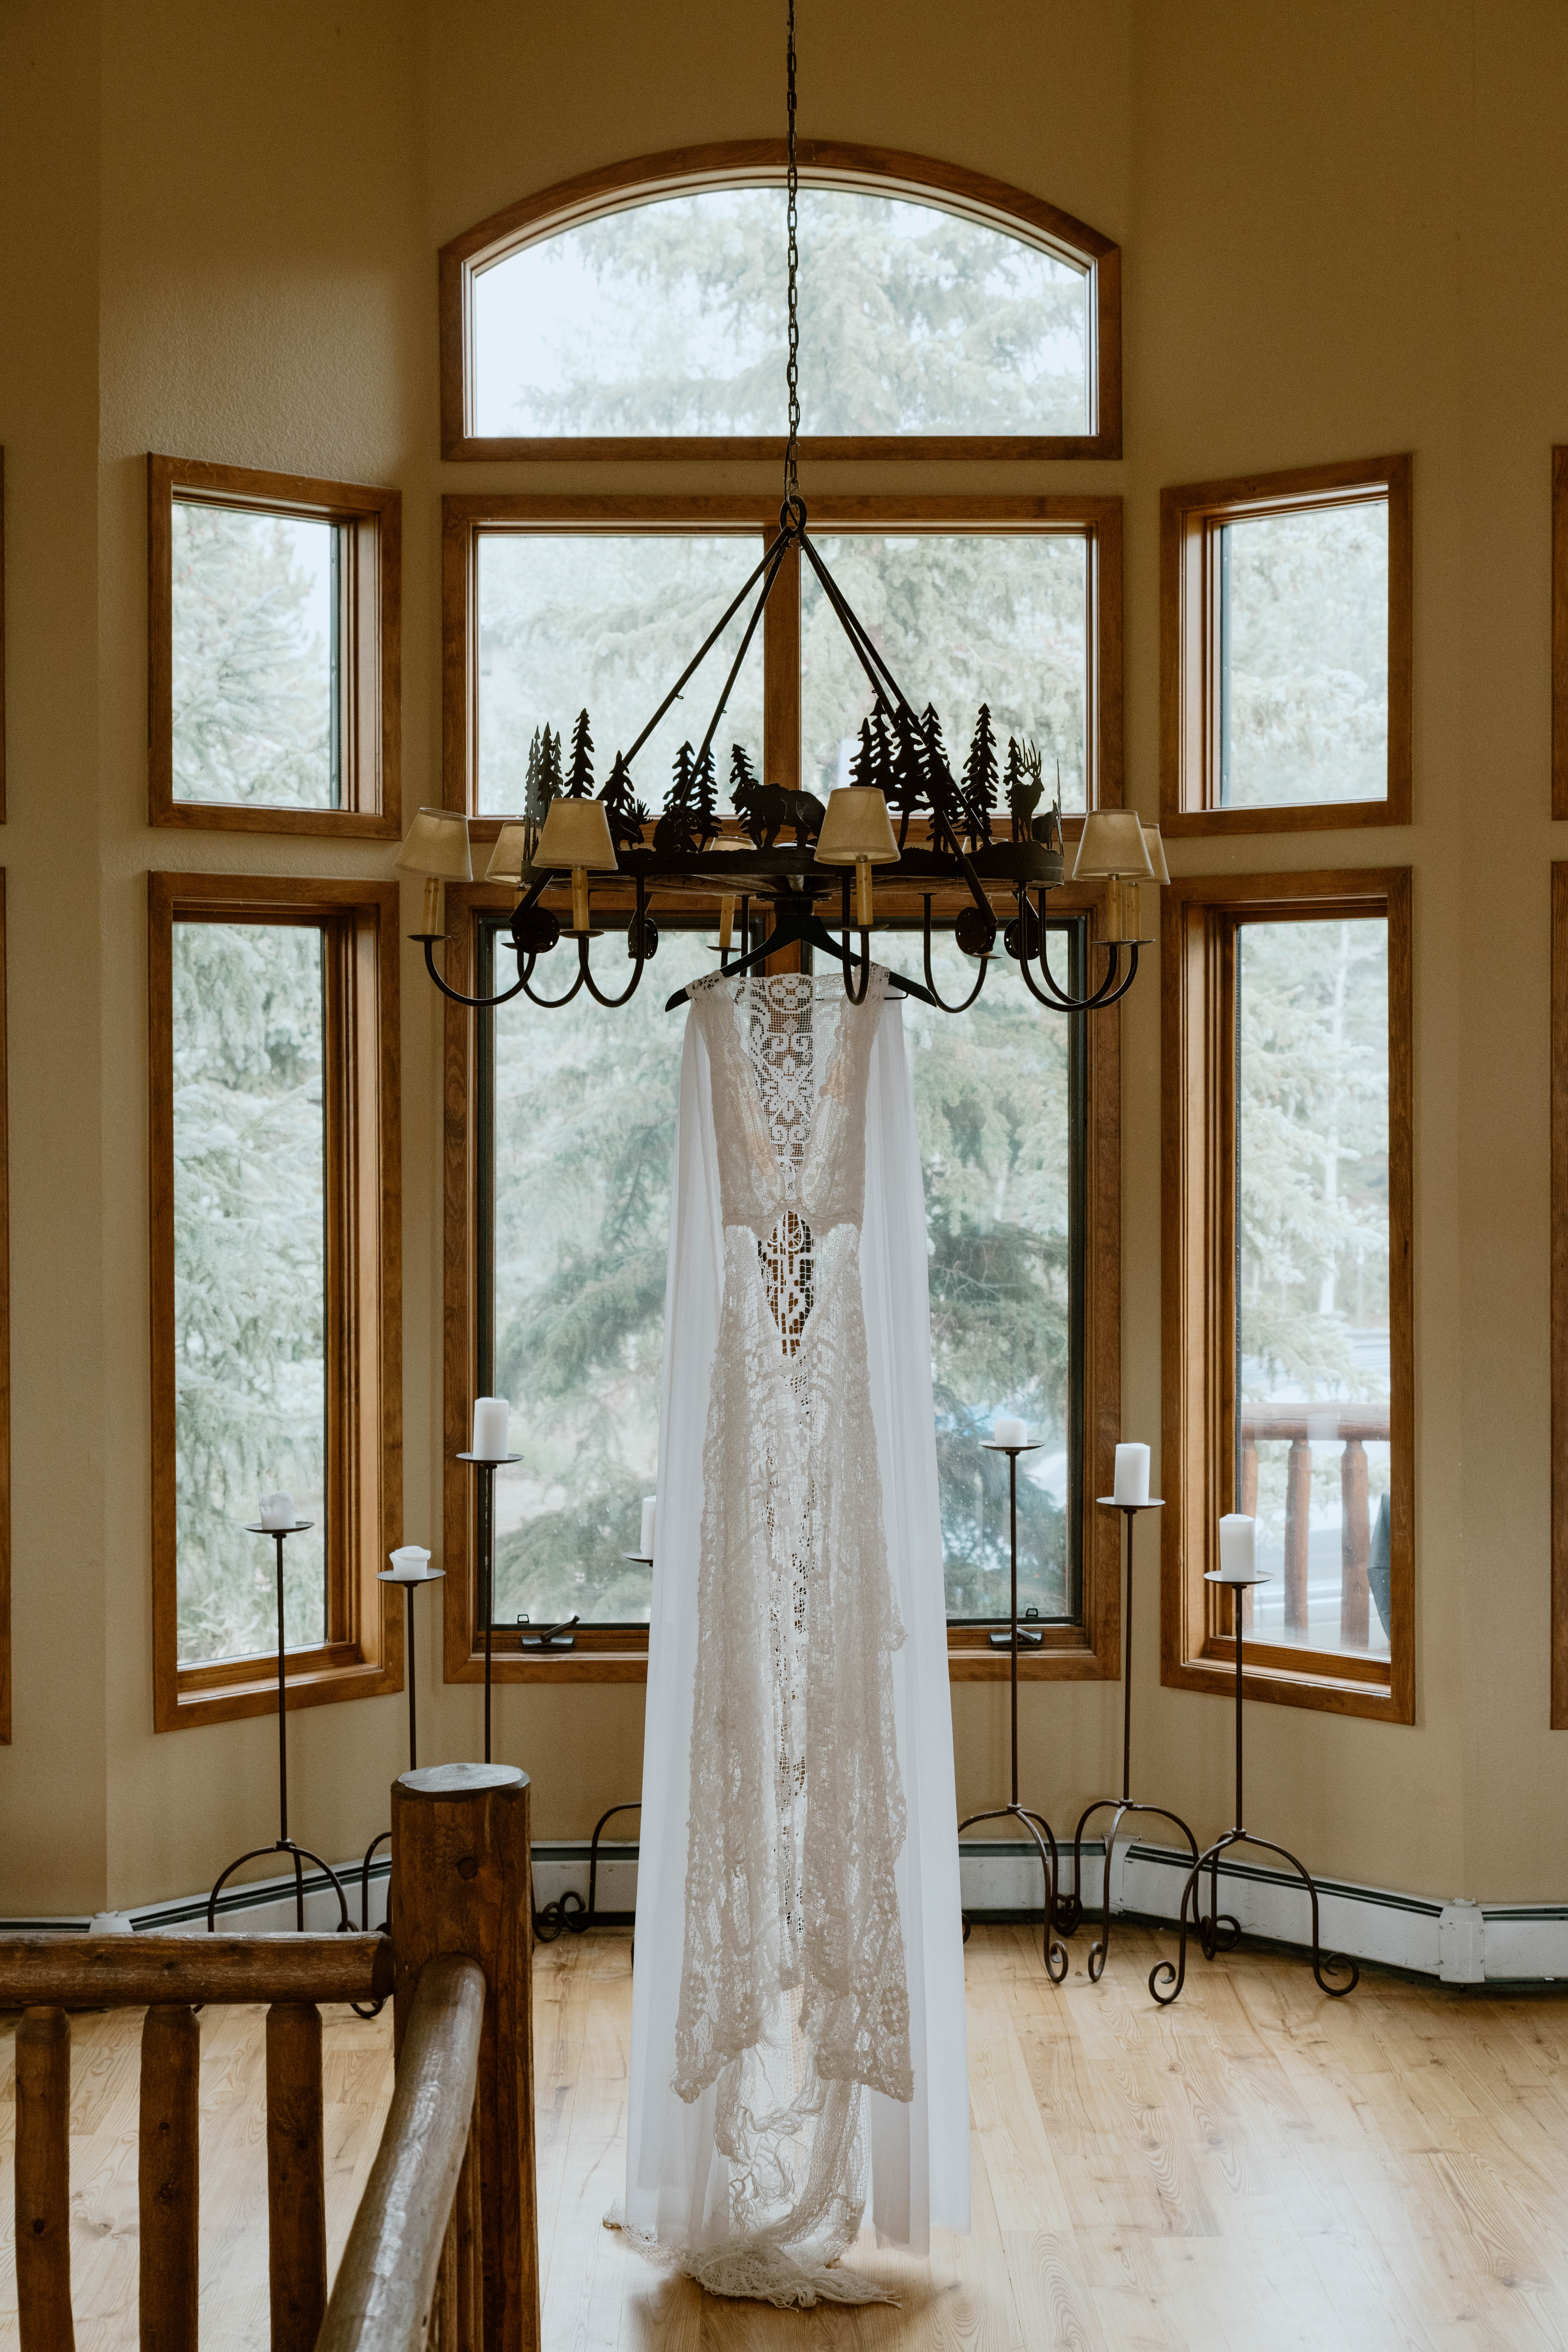 A wedding dress hangs from a rustic chandelier in a cabin in Colorado